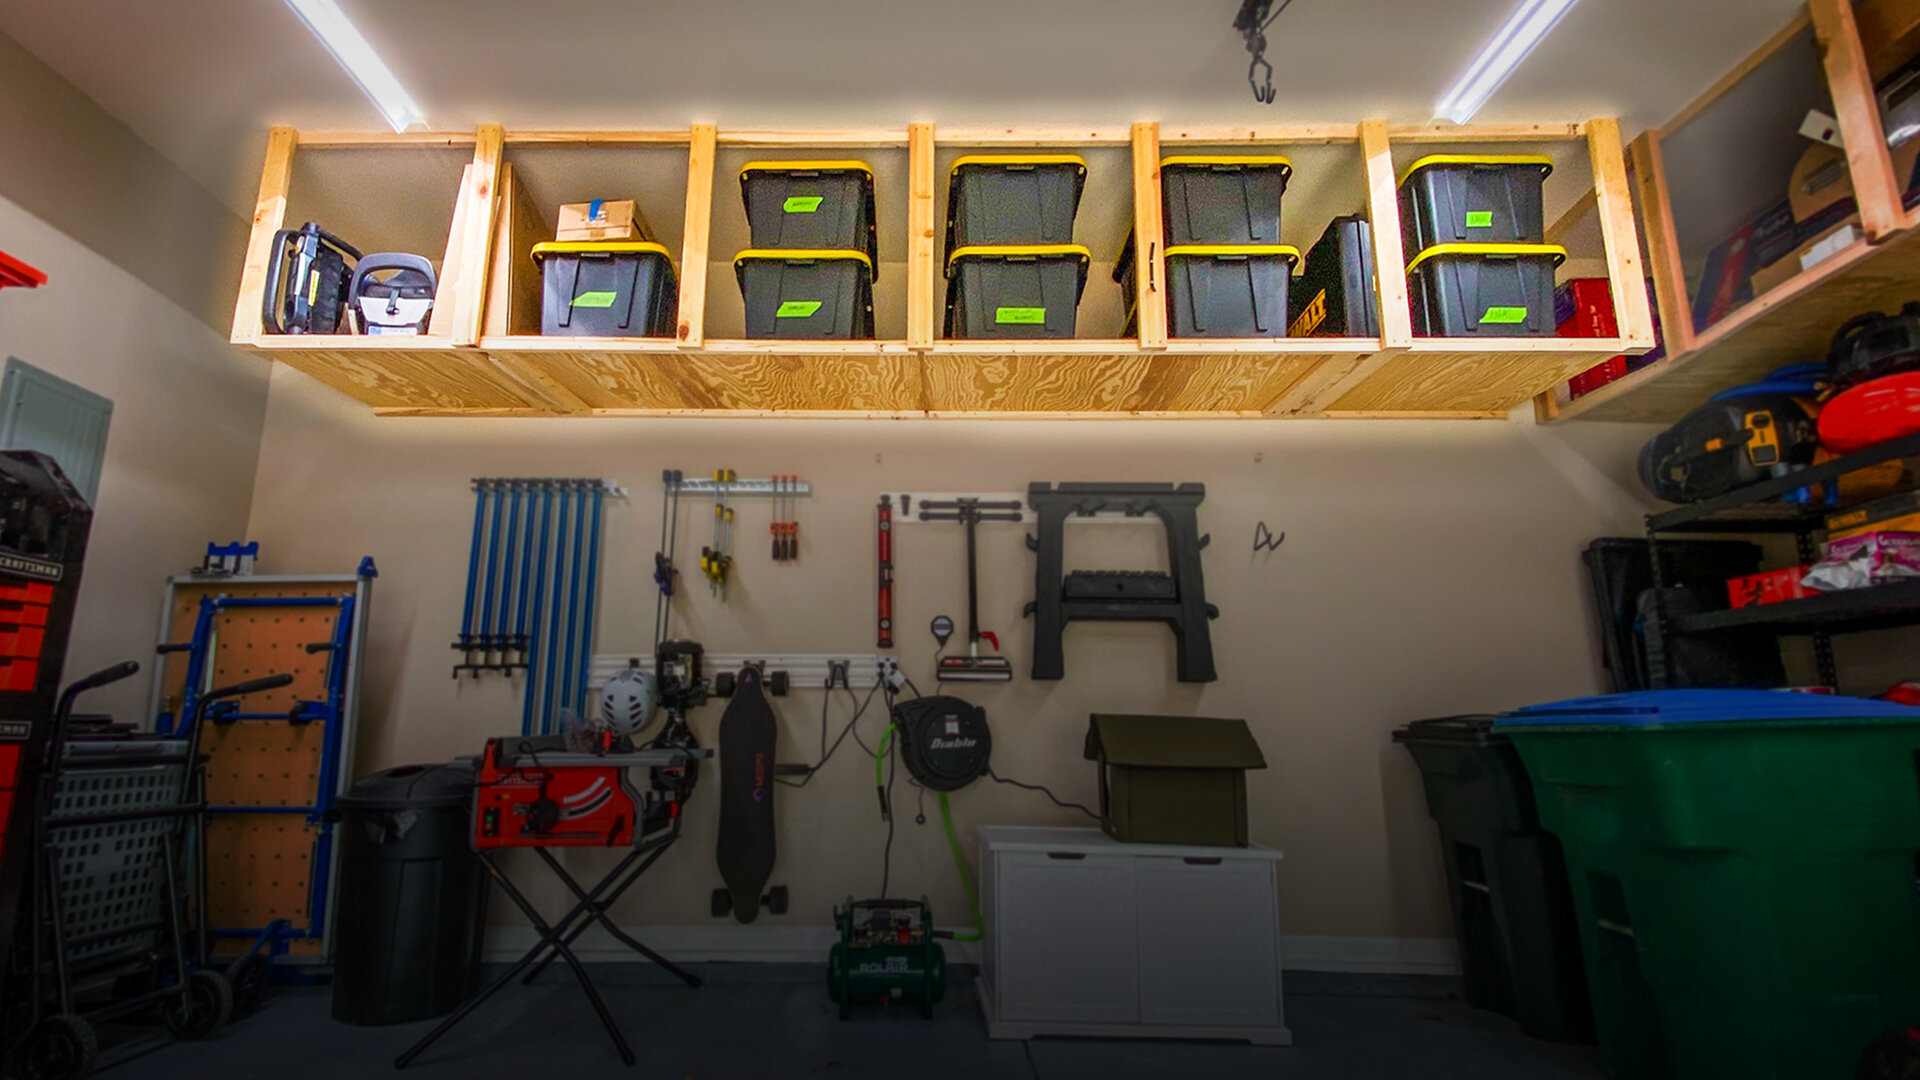 How To Build Diy Garage Storage Shelves, Suspended Shelves From Ceiling Garage